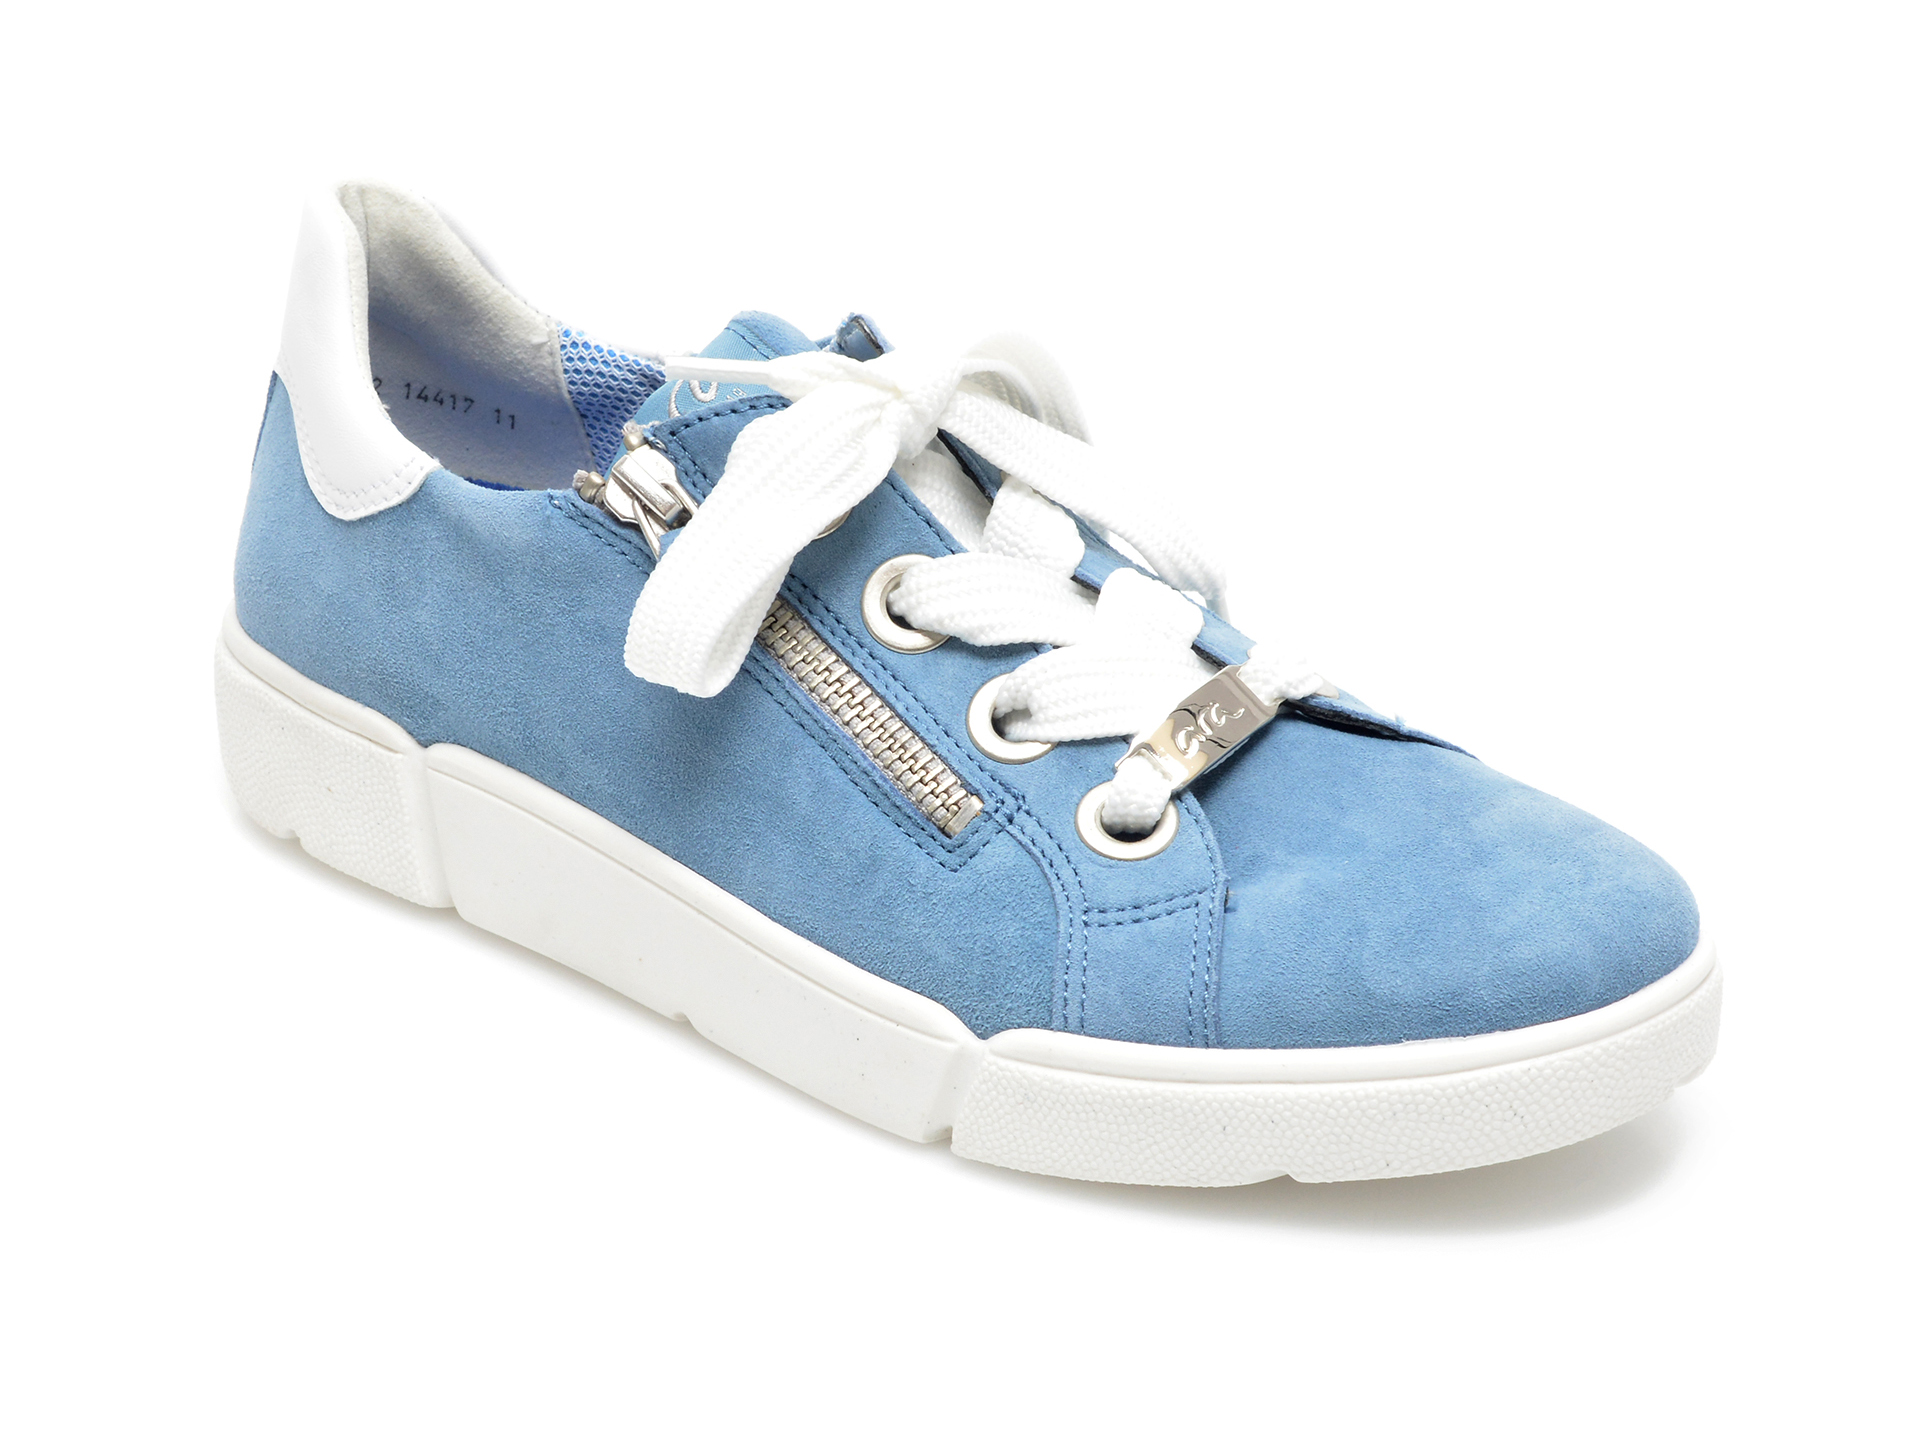 Pantofi sport ARA albastri, 14417, din piele intoarsa